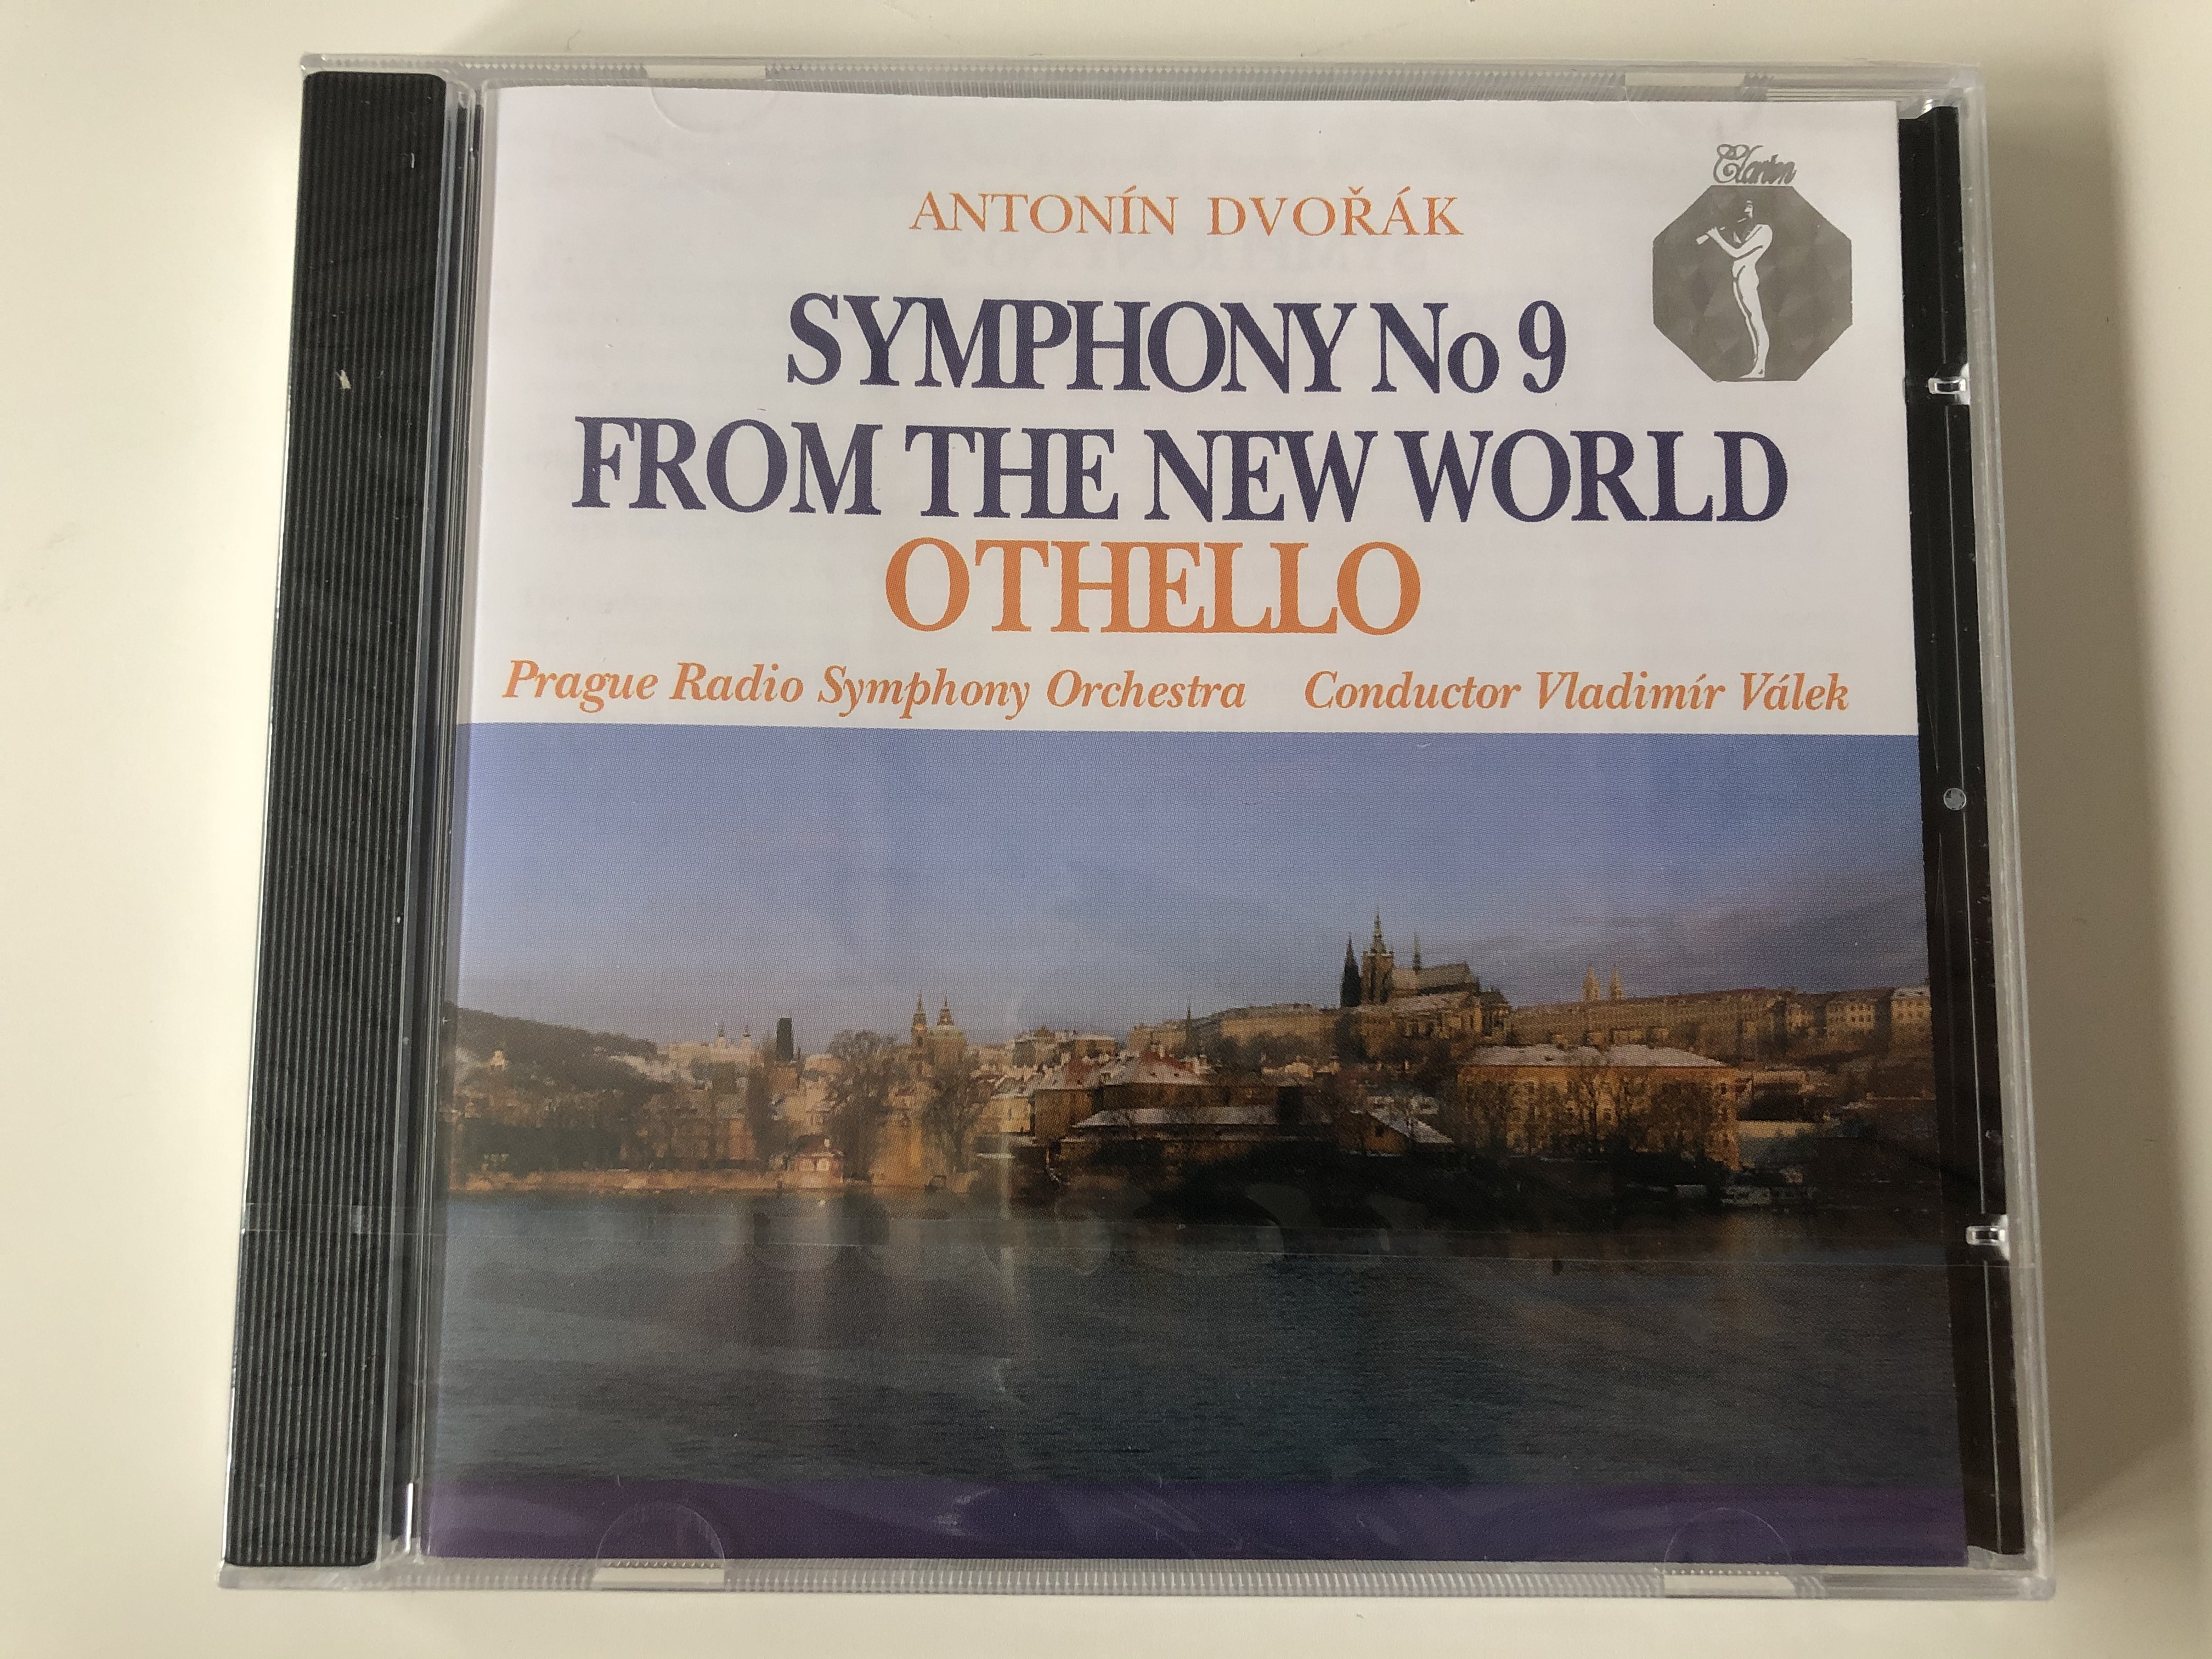 antonin-dvorak-symphony-no-9-from-the-new-world-othello-prague-radio-symphony-orchestra-conductor-vladimir-valek-clarton-audio-cd-1995-cq-0010-2-031-1-.jpg